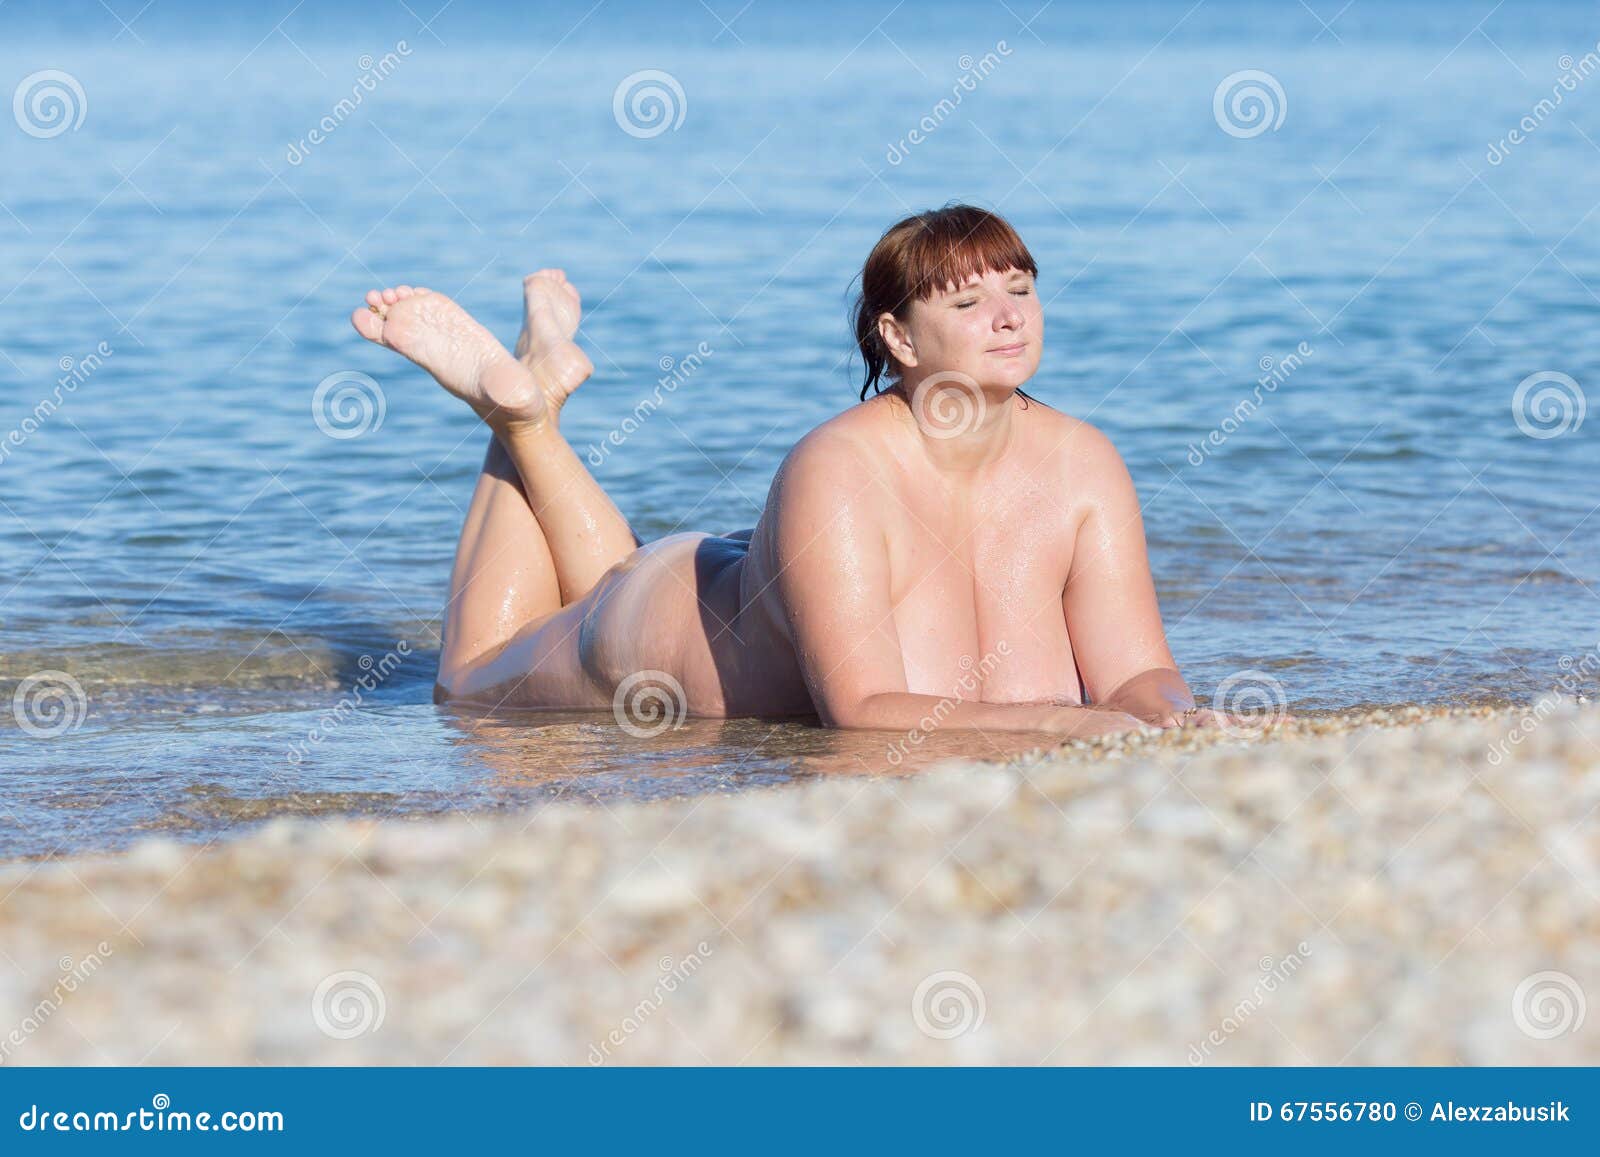 сын на пляже голым фото 46